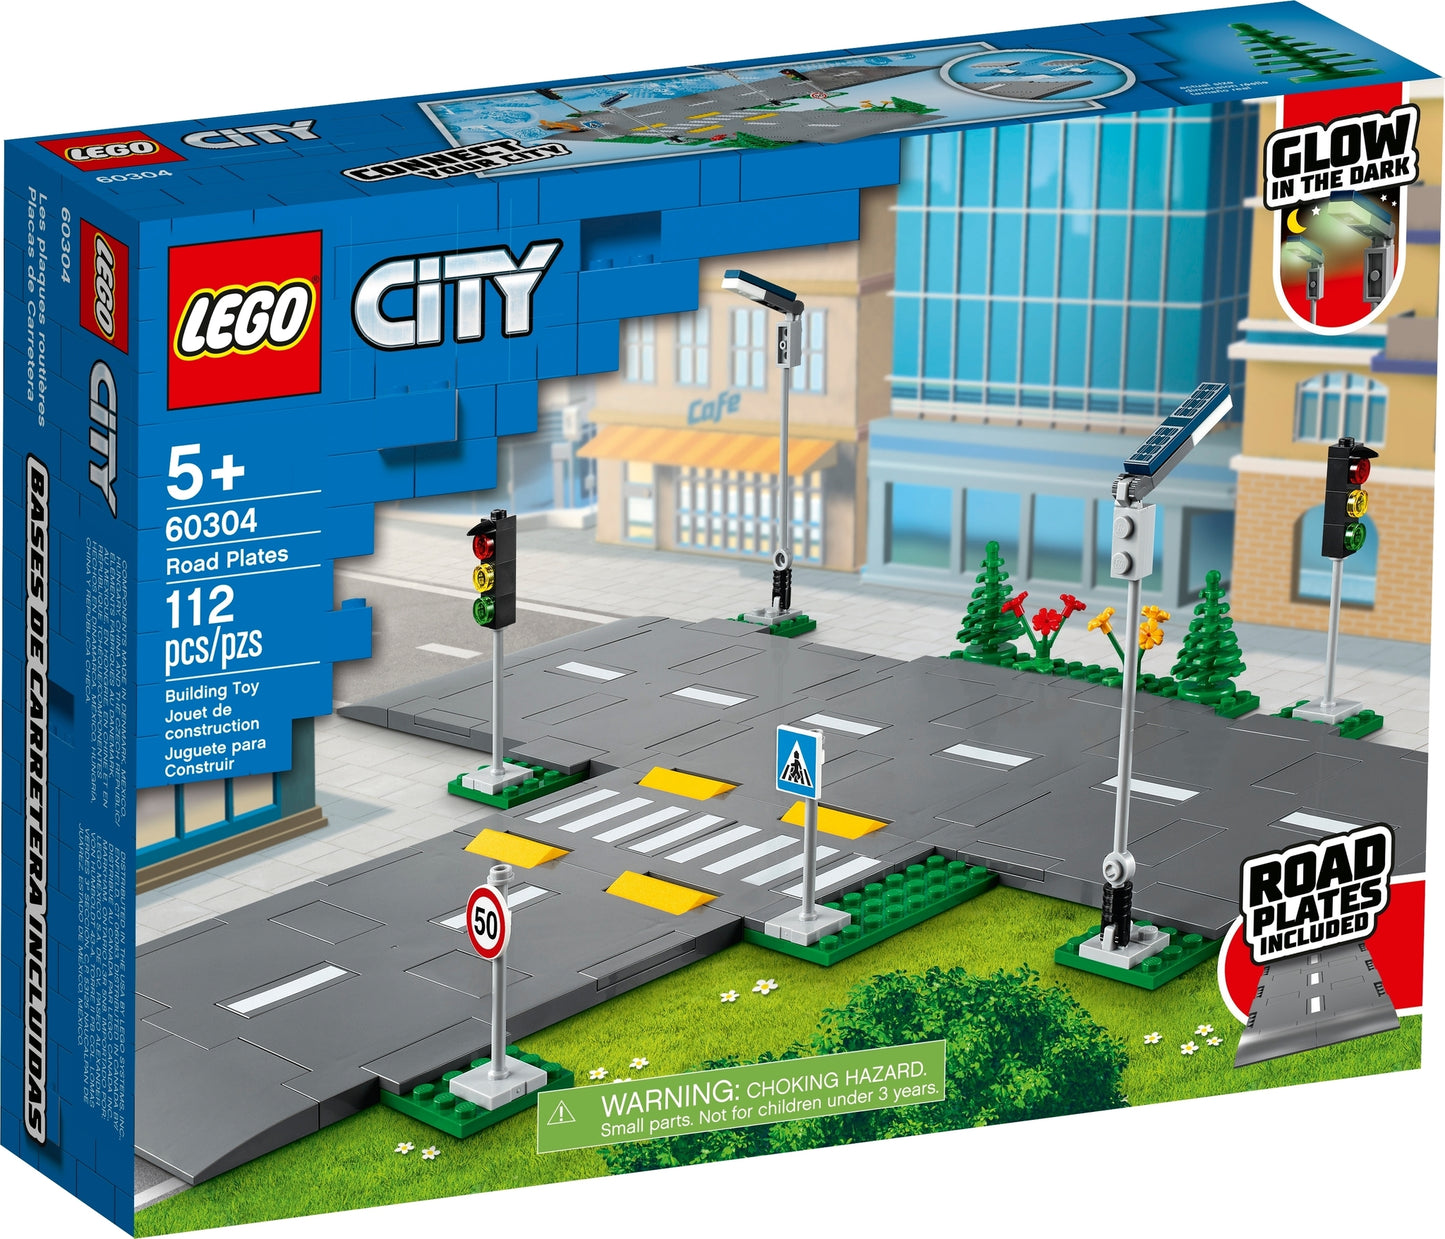 60304 LEGO City - Piattaforme Stradali